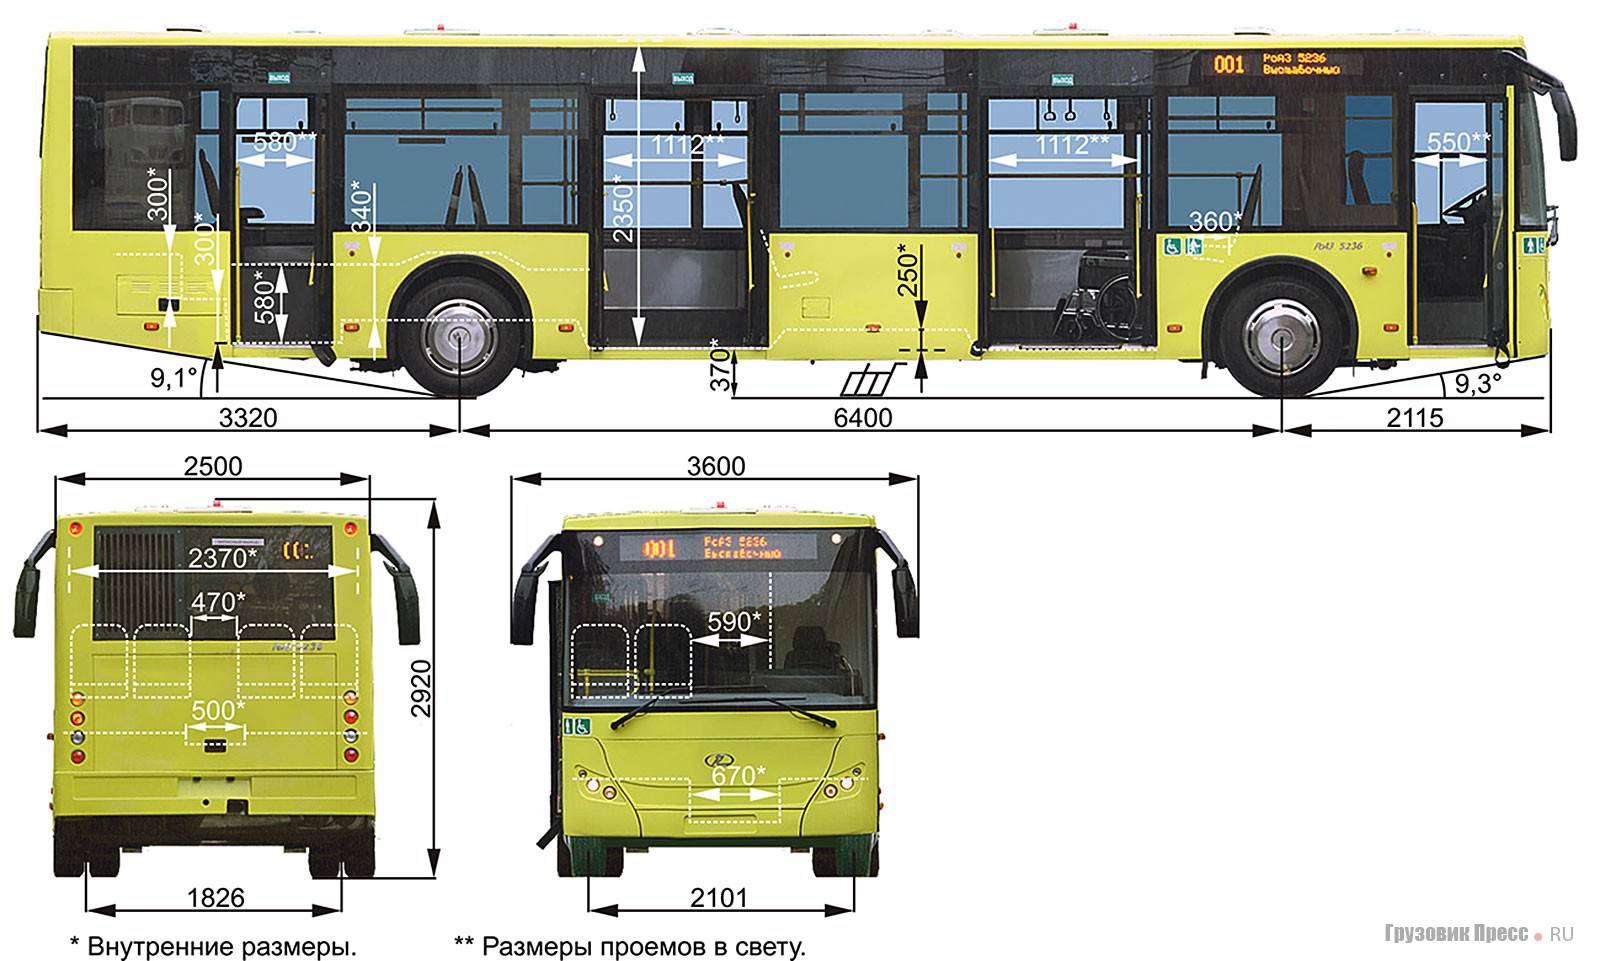 Конструкция элементов кузова автобуса паз-32053-07, паз-4234